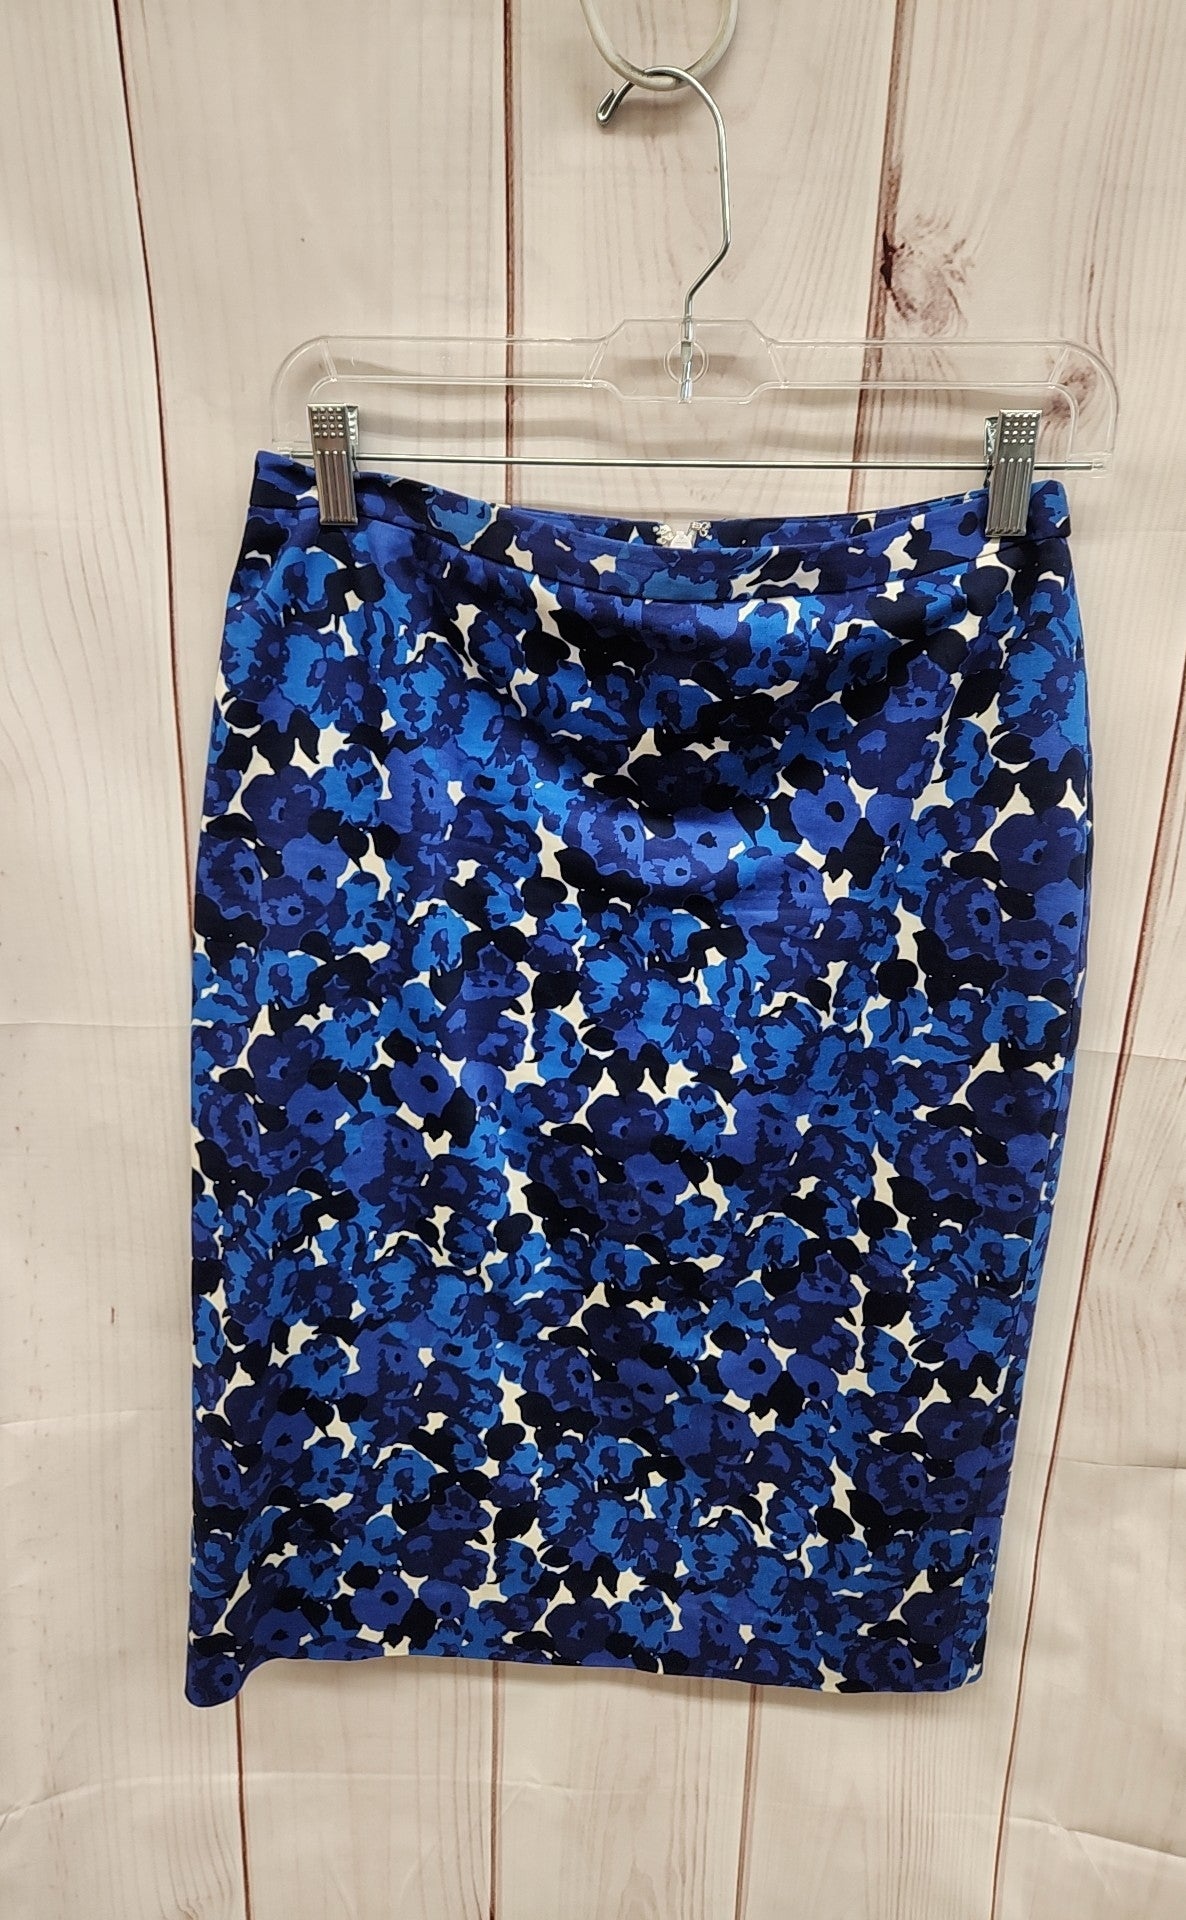 Pure Women's Size 4 Blue Floral Skirt